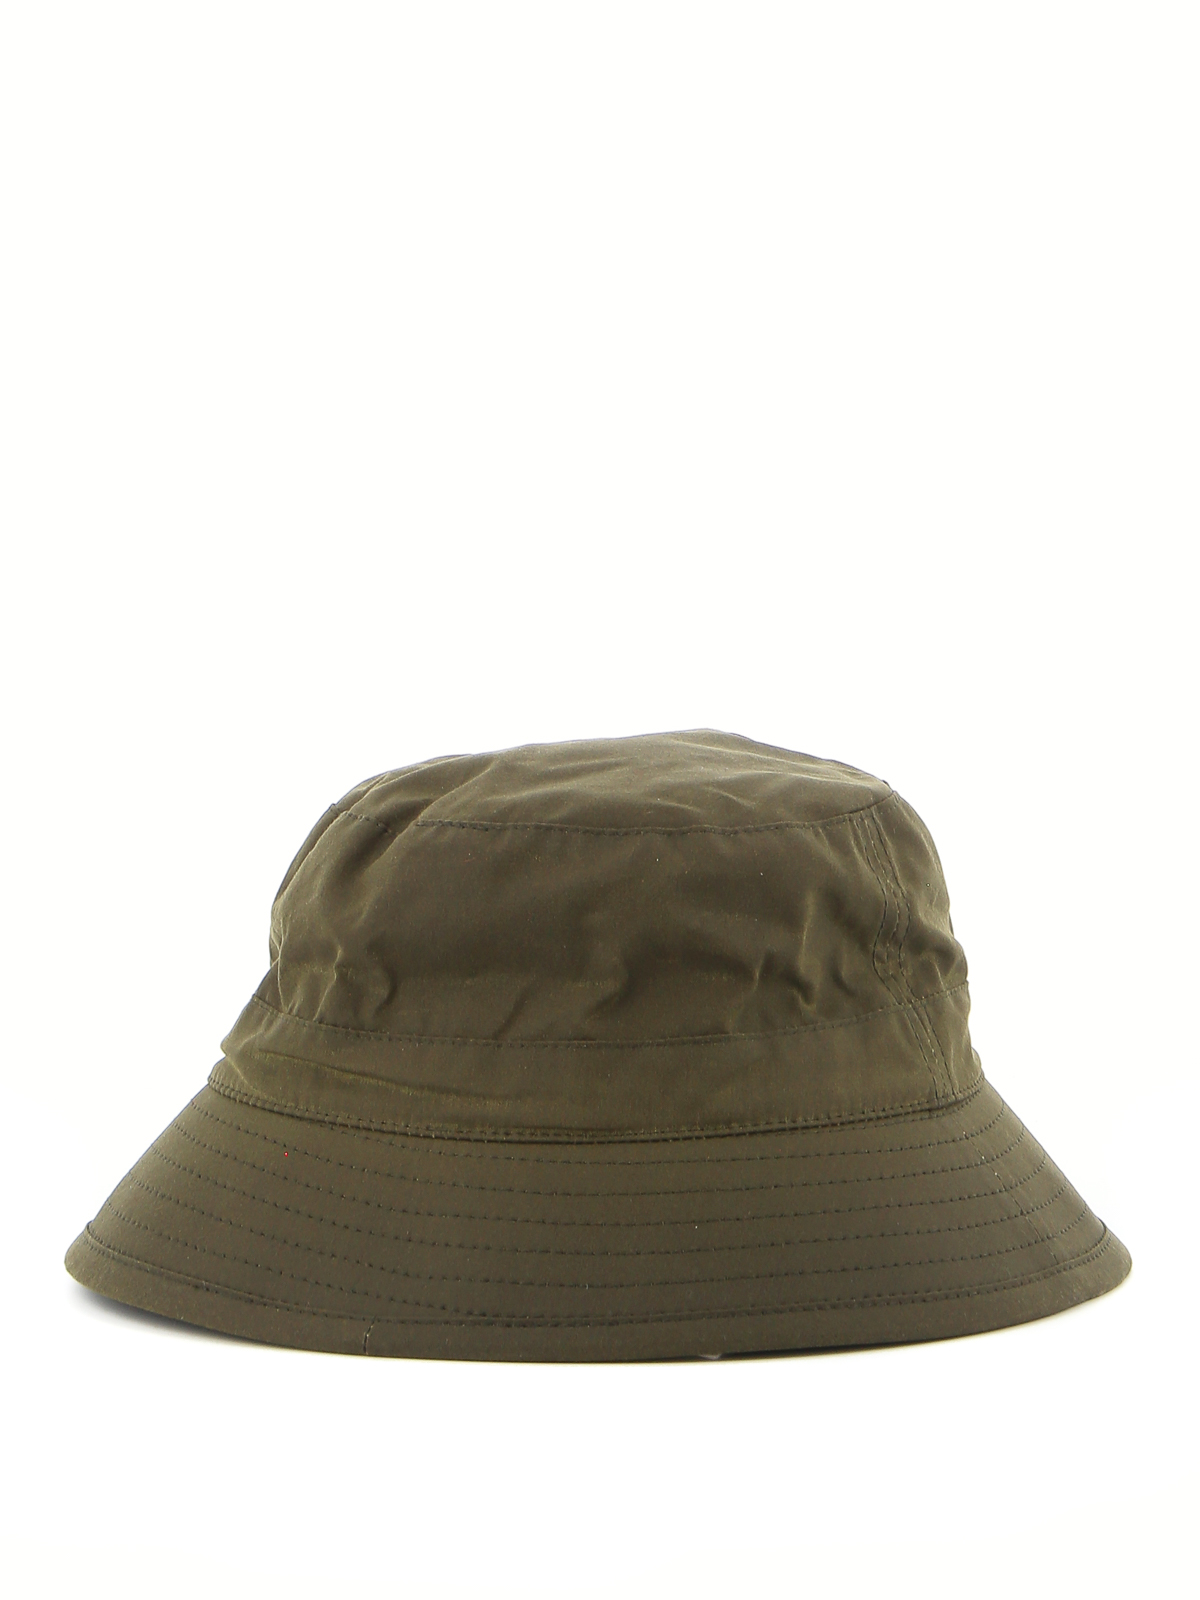 Hats & caps Barbour - Wax Sport Fisherman hat - MHA0001OL31 | iKRIX.com